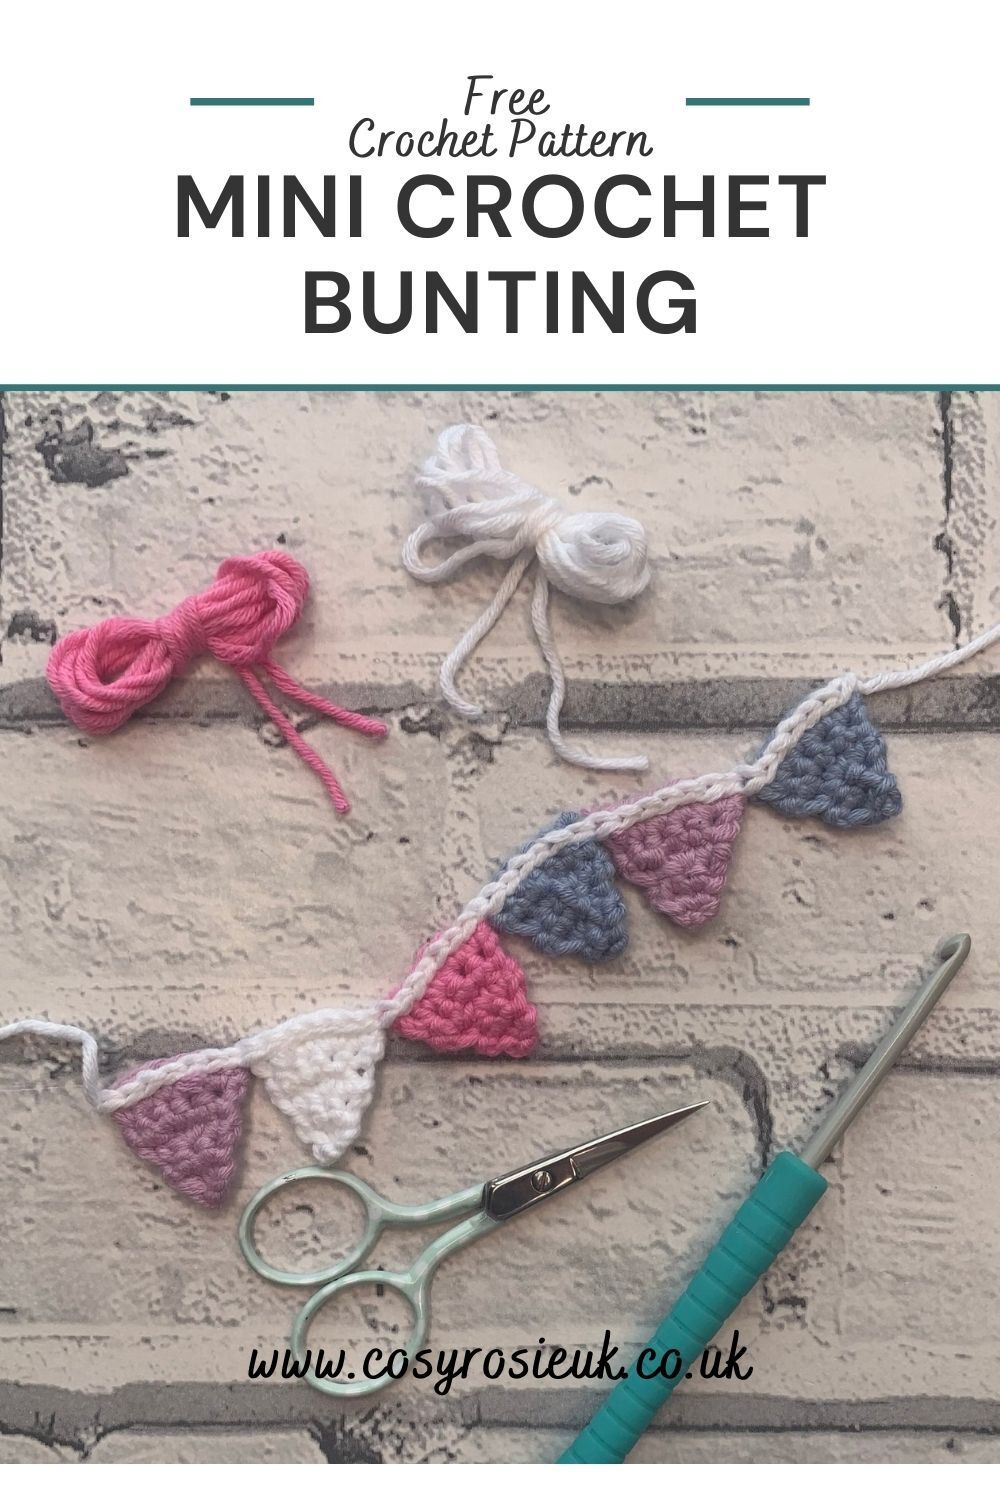 Mini Crochet Bunting Free Pattern